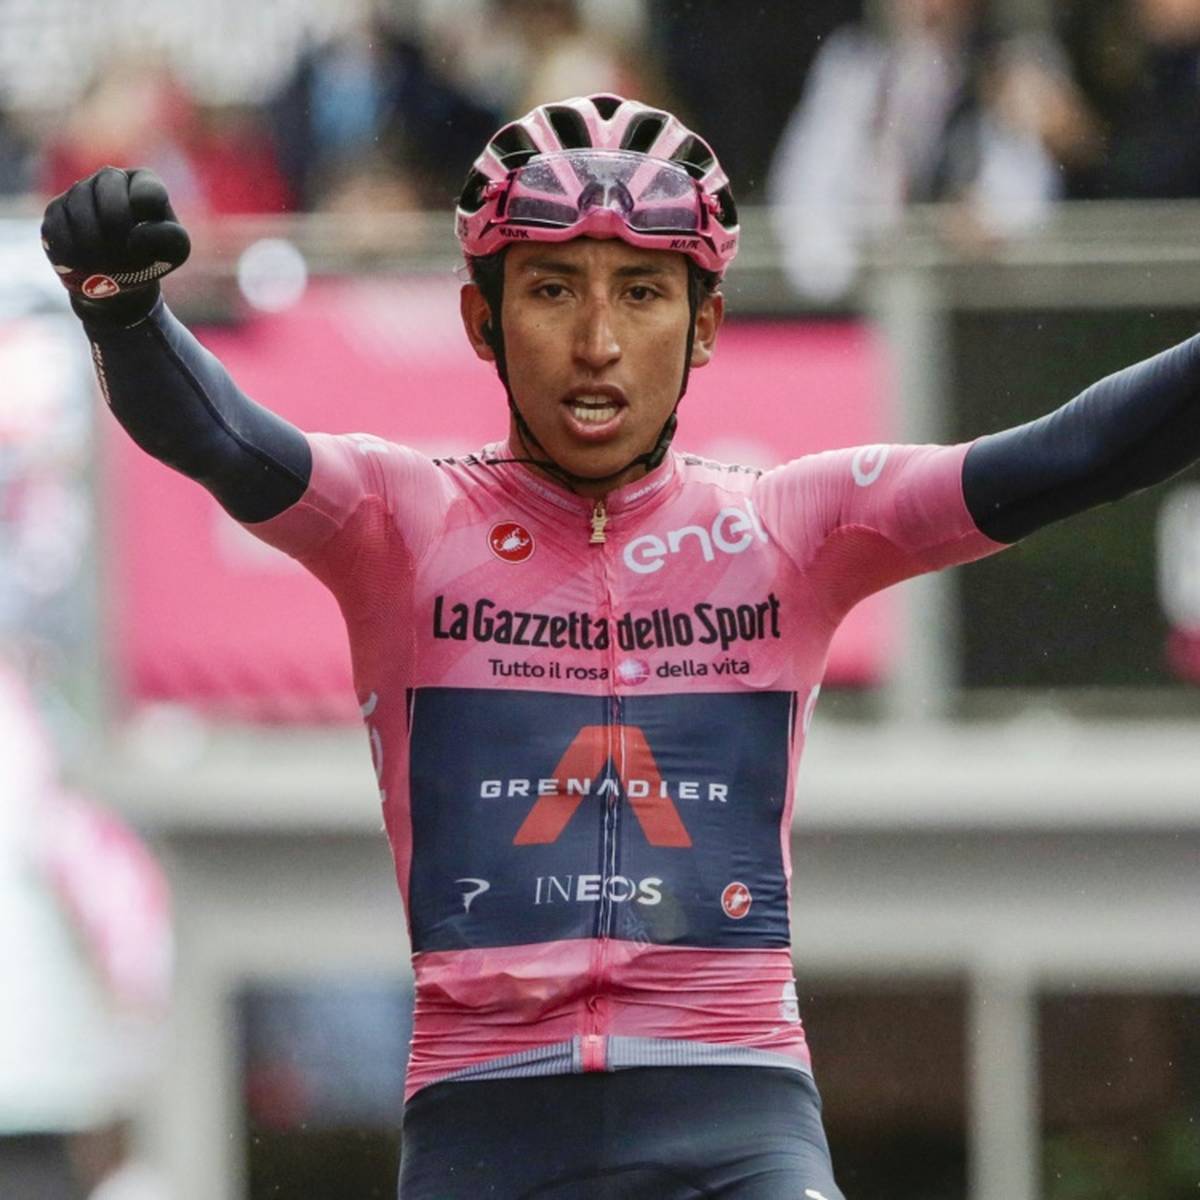 Der frühere Tour-de-France-Gewinner Egan Bernal hat sich vier Tage nach seinem schweren Trainingsunfall in seiner Heimat Kolumbien erstmals geäußert.